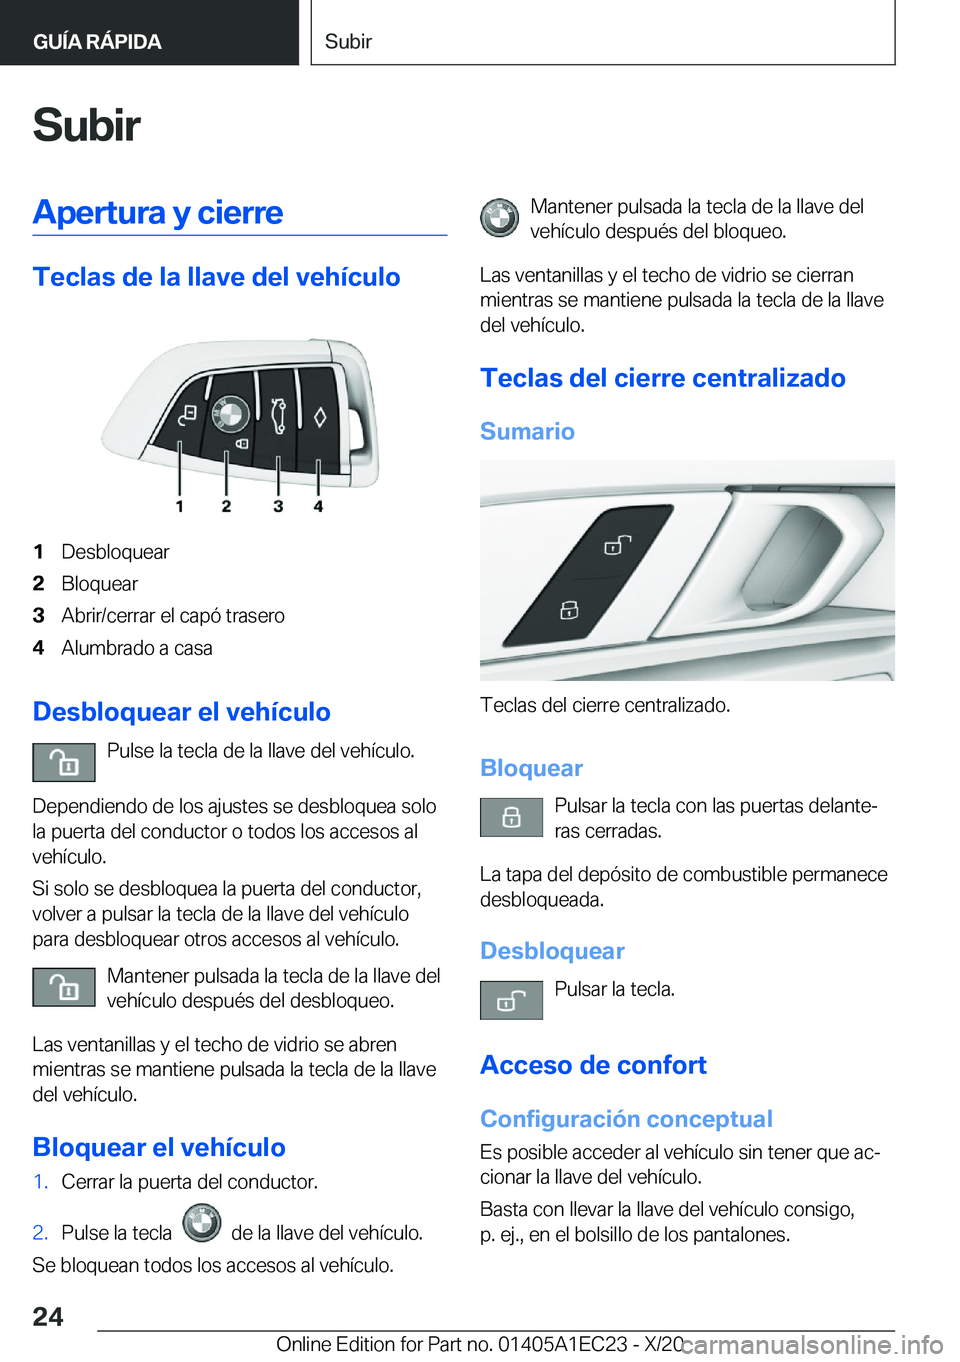 BMW 8 SERIES GRAN COUPE 2021  Manuales de Empleo (in Spanish) �S�u�b�i�r�A�p�e�r�t�u�r�a��y��c�i�e�r�r�e
�T�e�c�l�a�s��d�e��l�a��l�l�a�v�e��d�e�l��v�e�h�